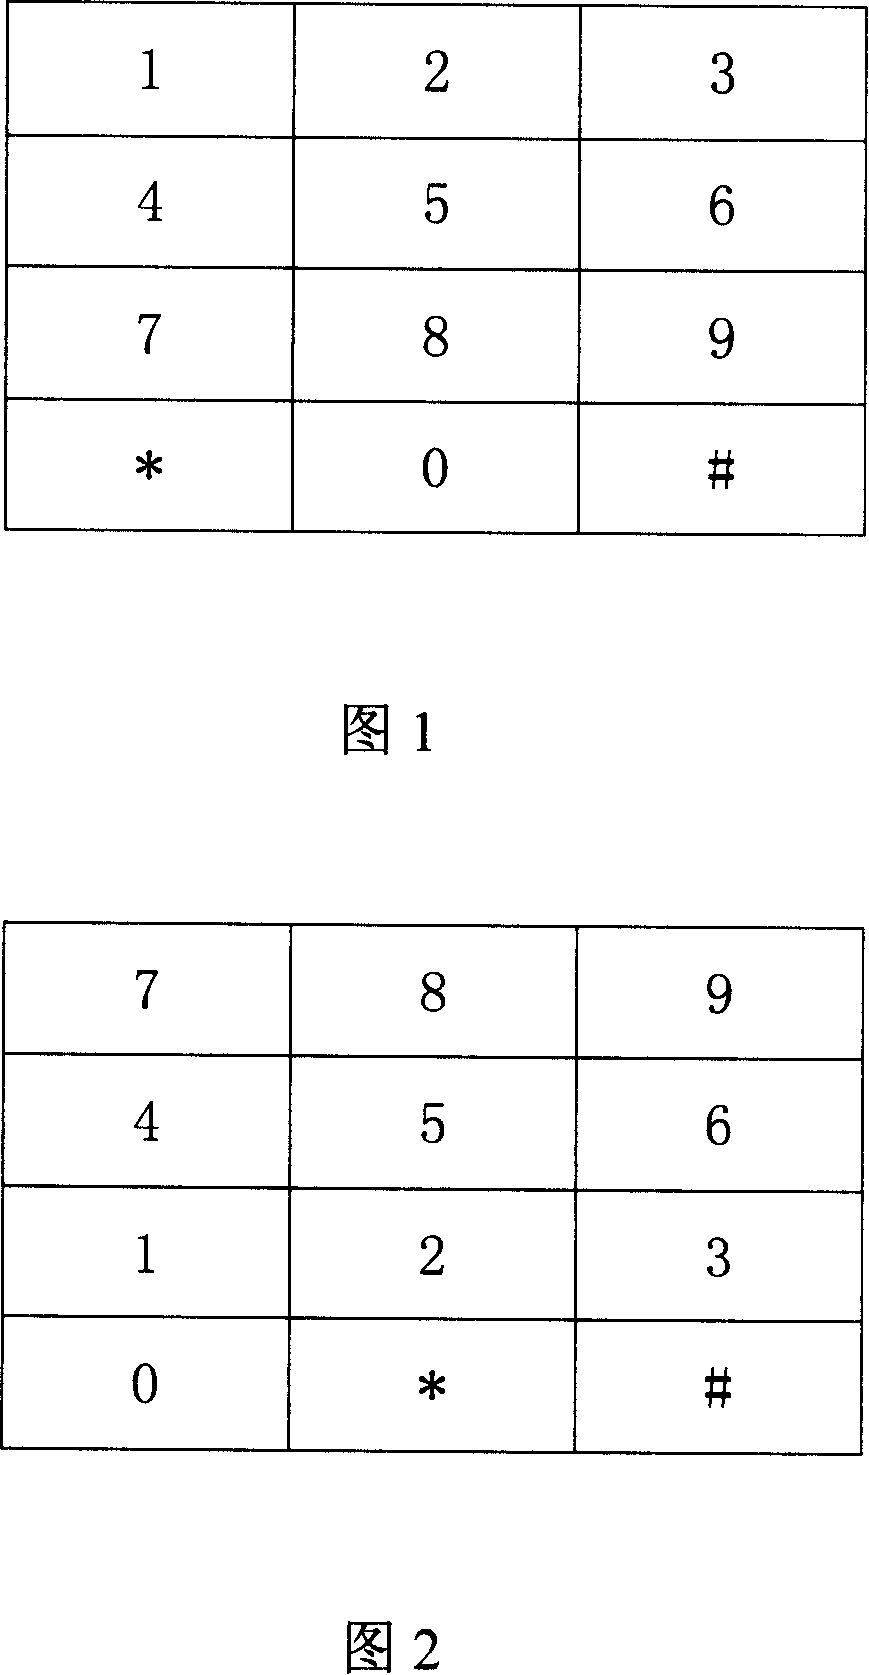 Digital keyboard English and Chinese input method